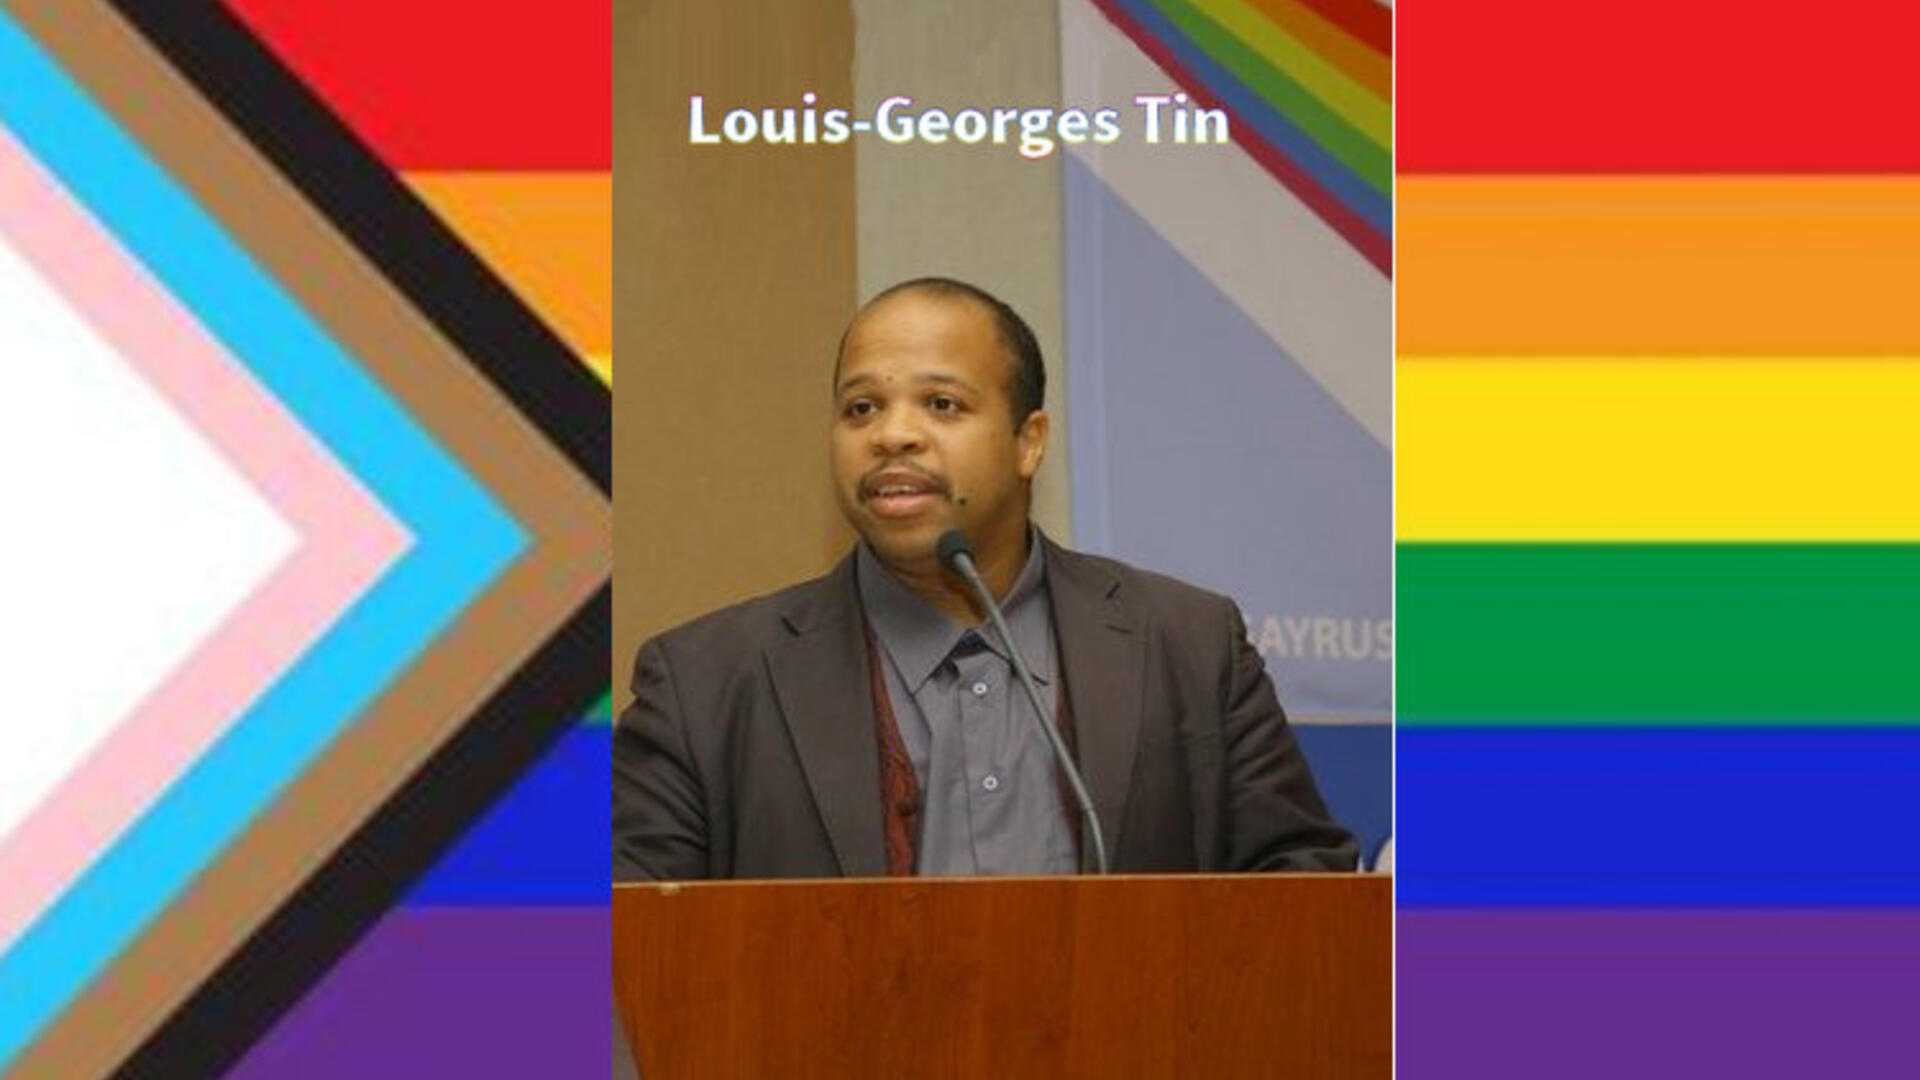 Portret van Louis-Georges Tin in een progressiv e rainbow flag